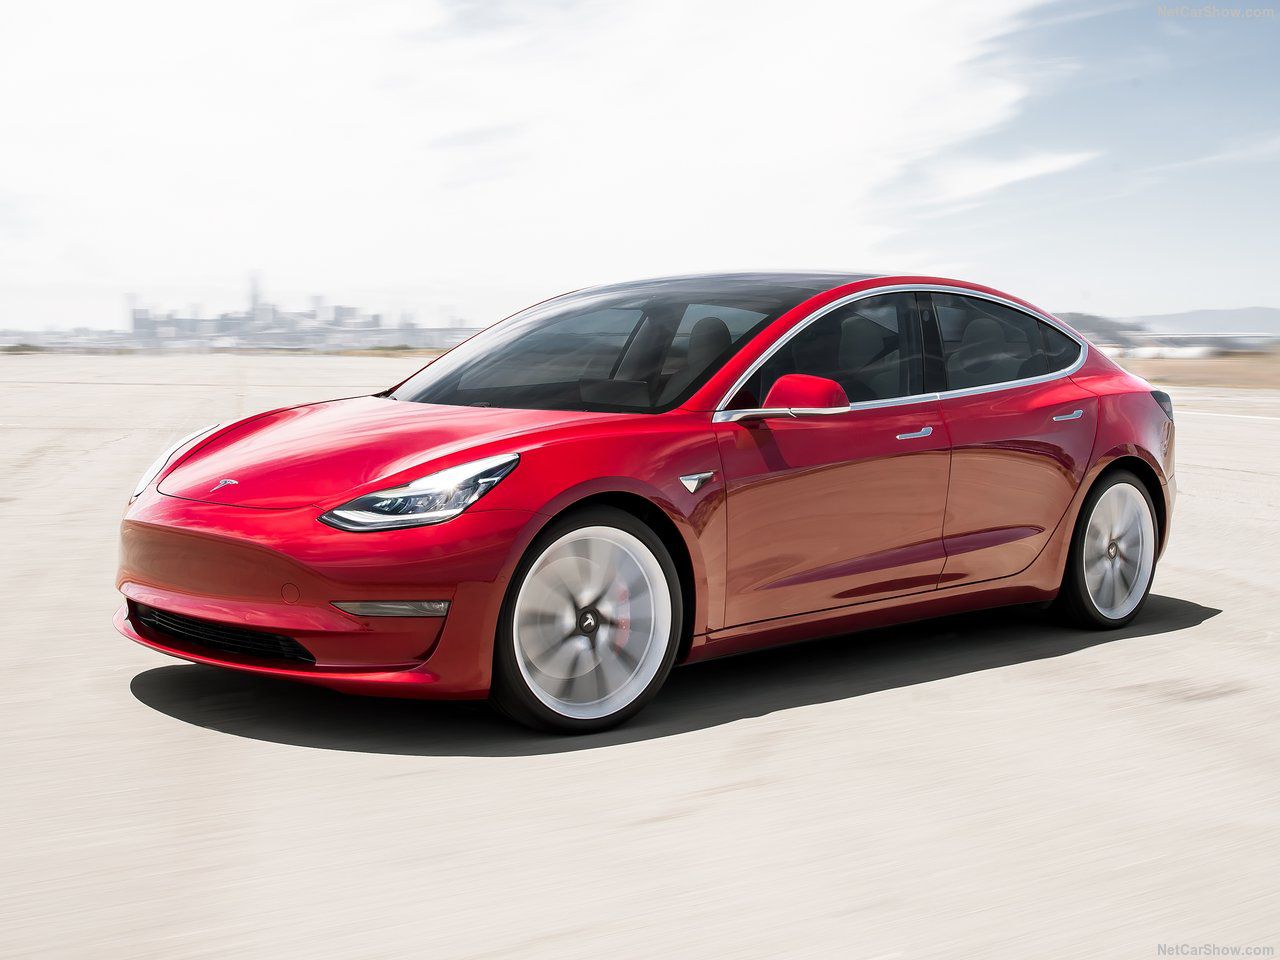 zwavel Overgave hardware Tesla presenta un nuevo Model 3 por $ 23 millones - La Tercera